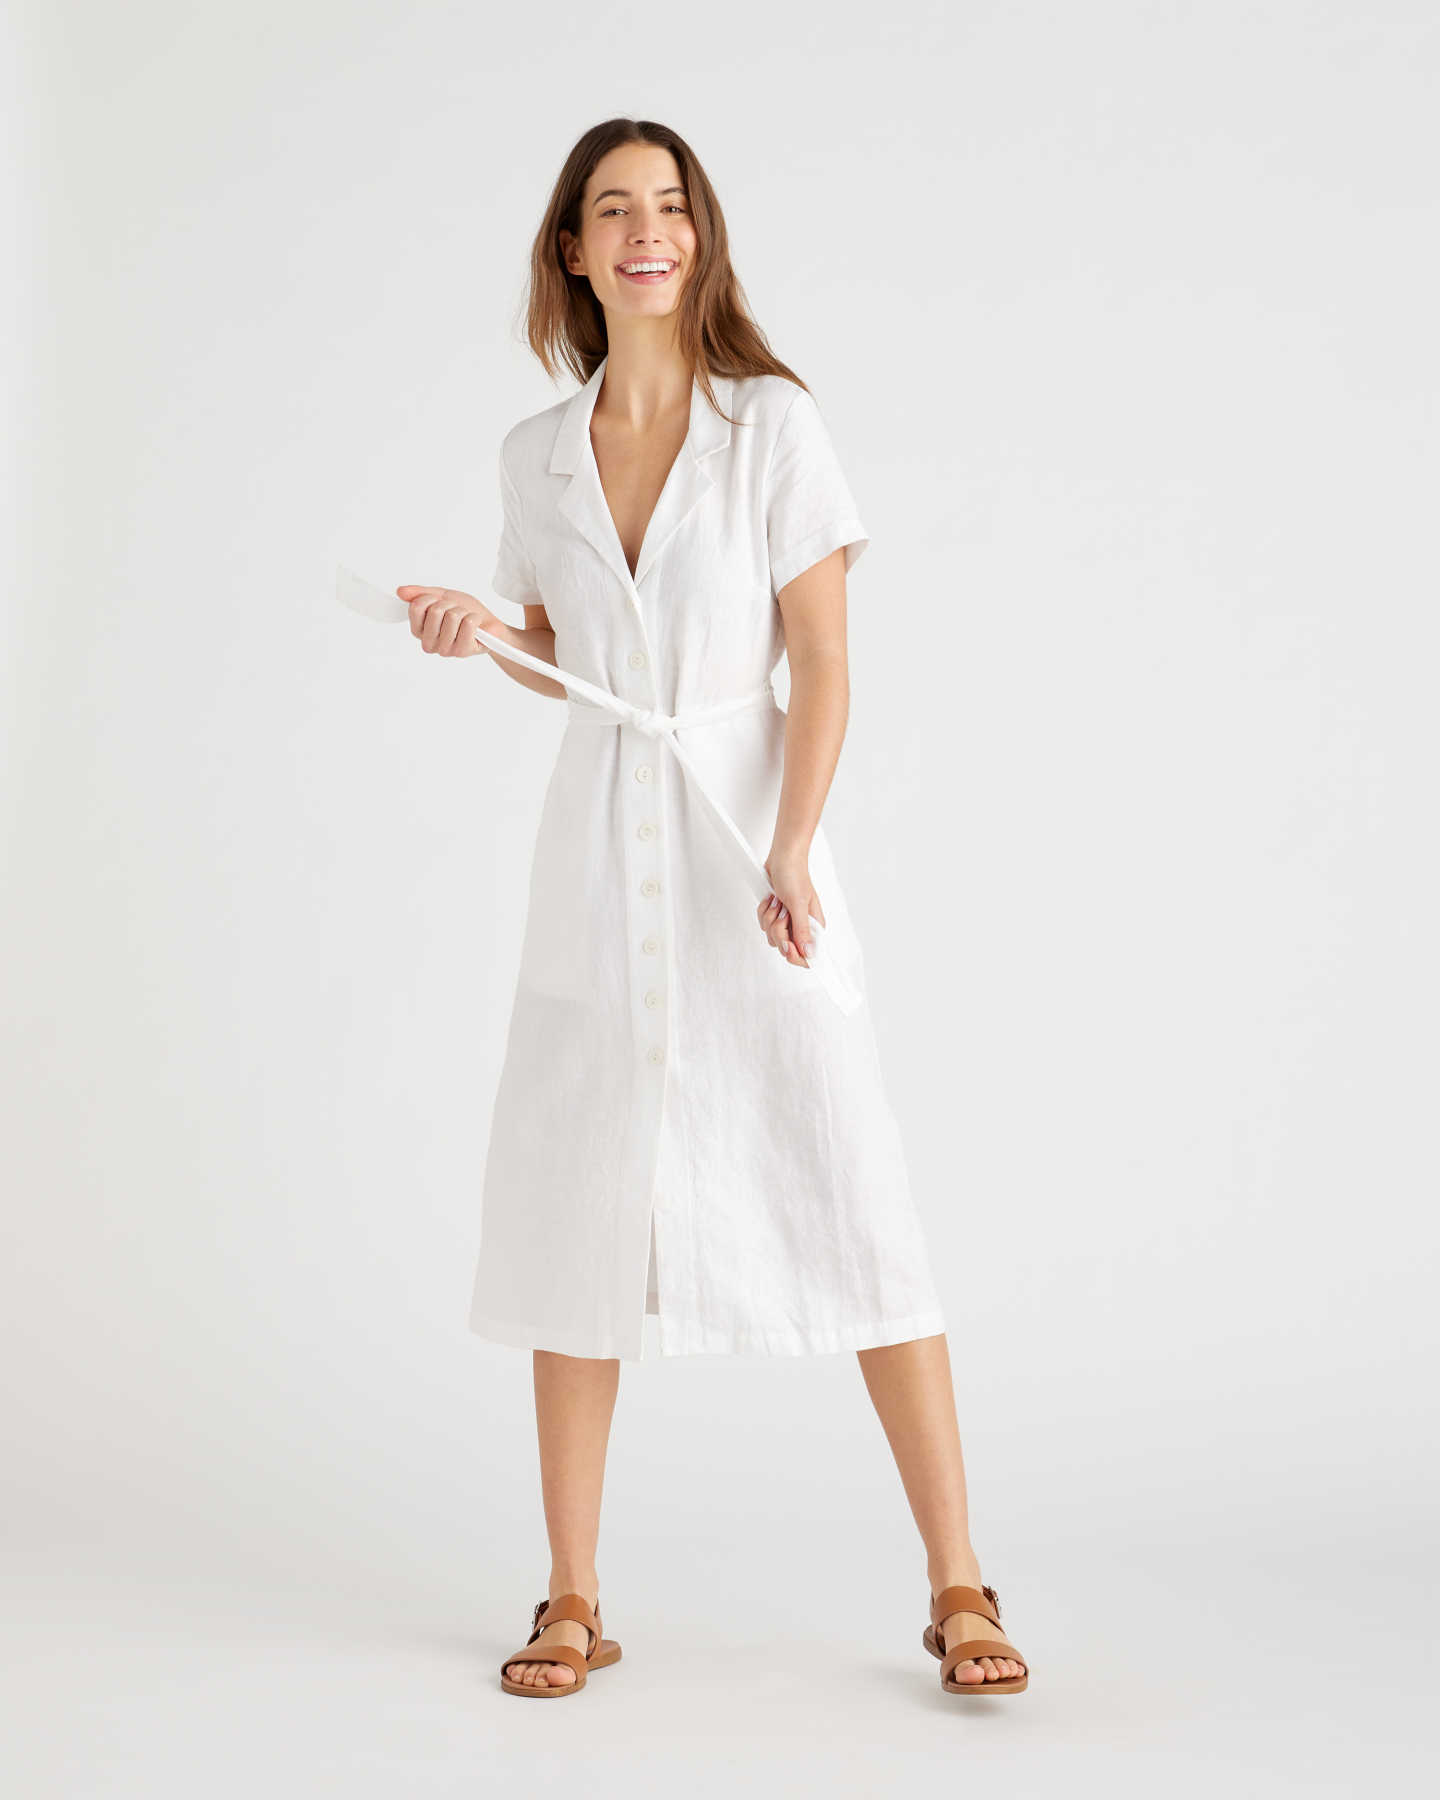 100% European Linen Button Front Dress - White - 1